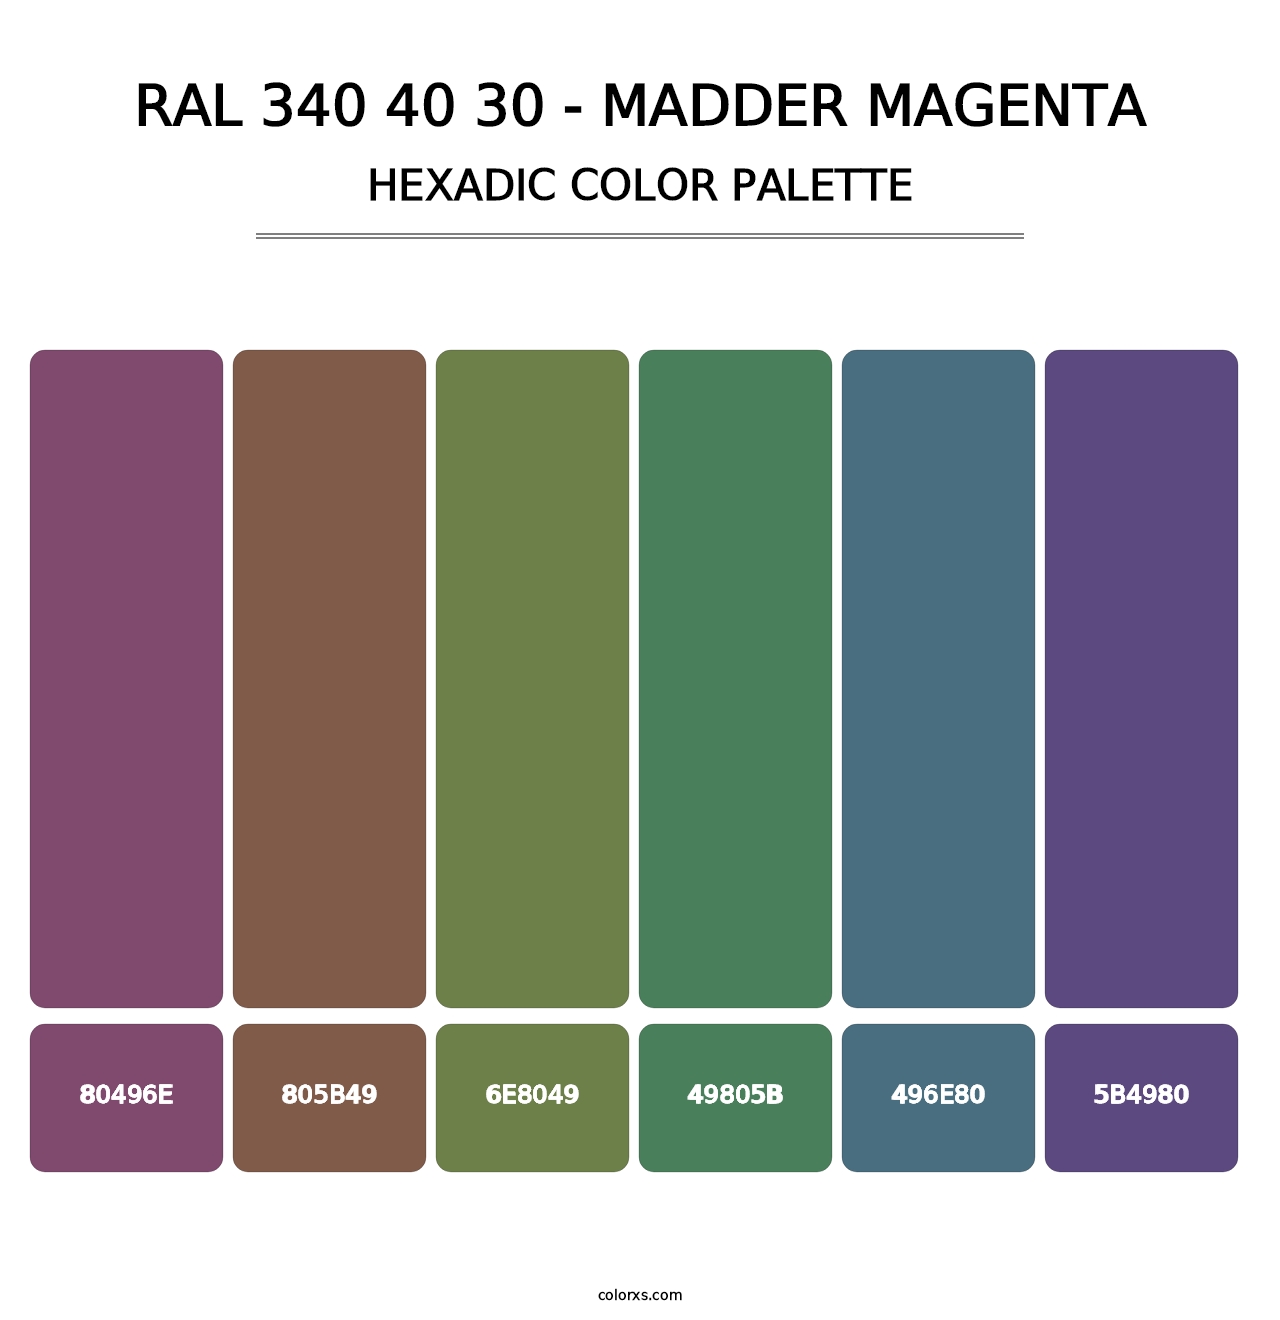 RAL 340 40 30 - Madder Magenta - Hexadic Color Palette